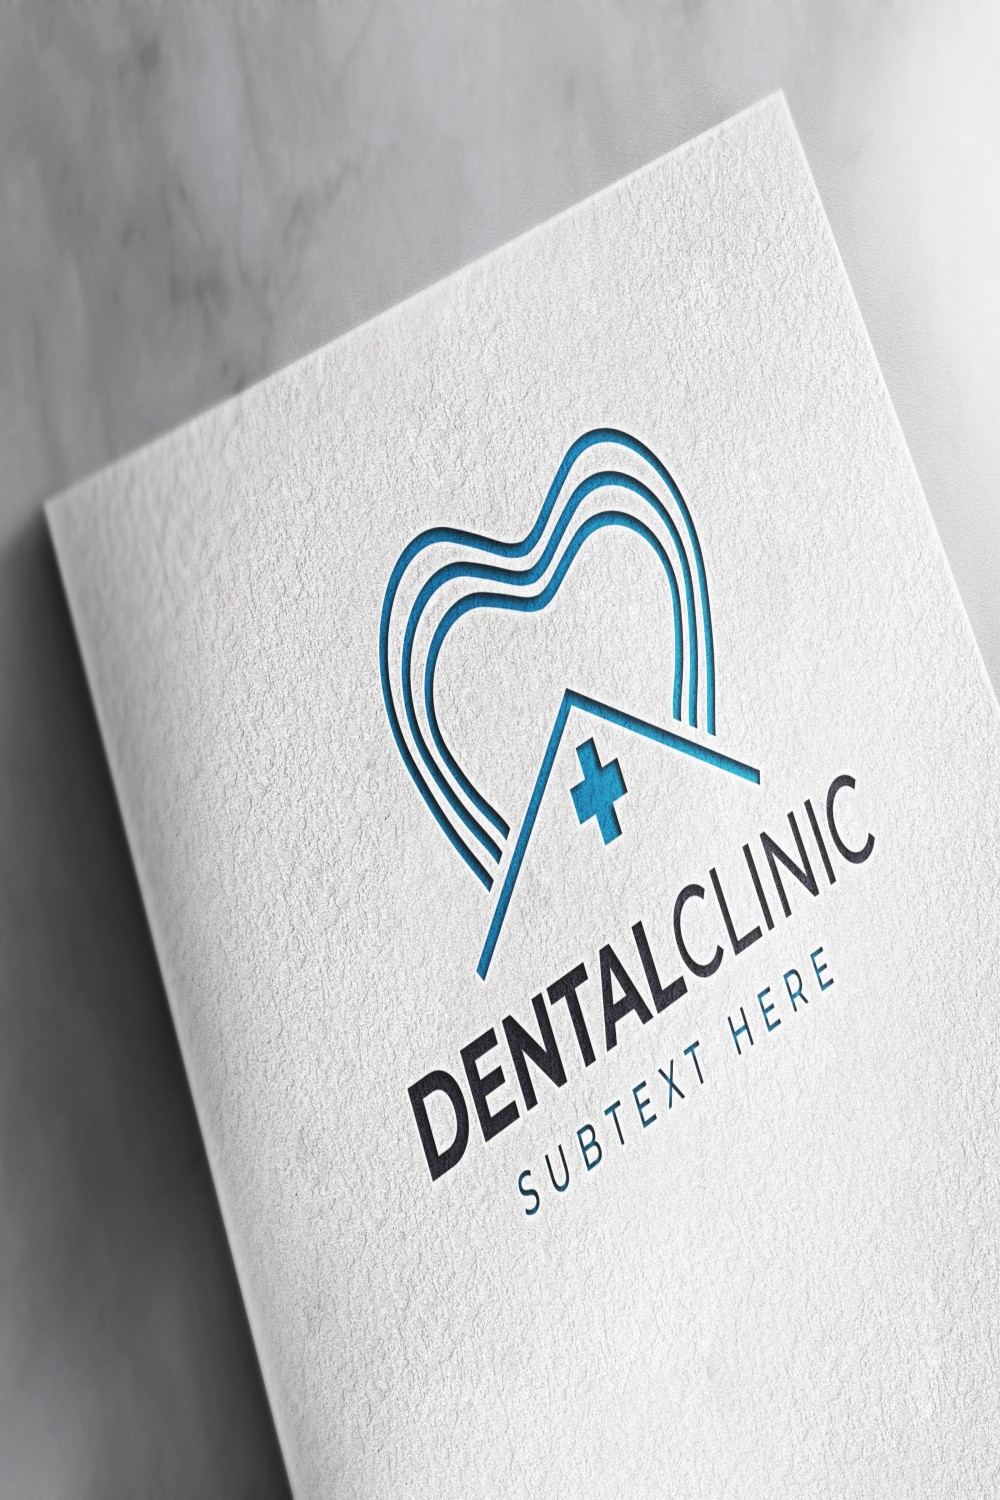 Dental Clinic Vector Logo Template Pinterest image.